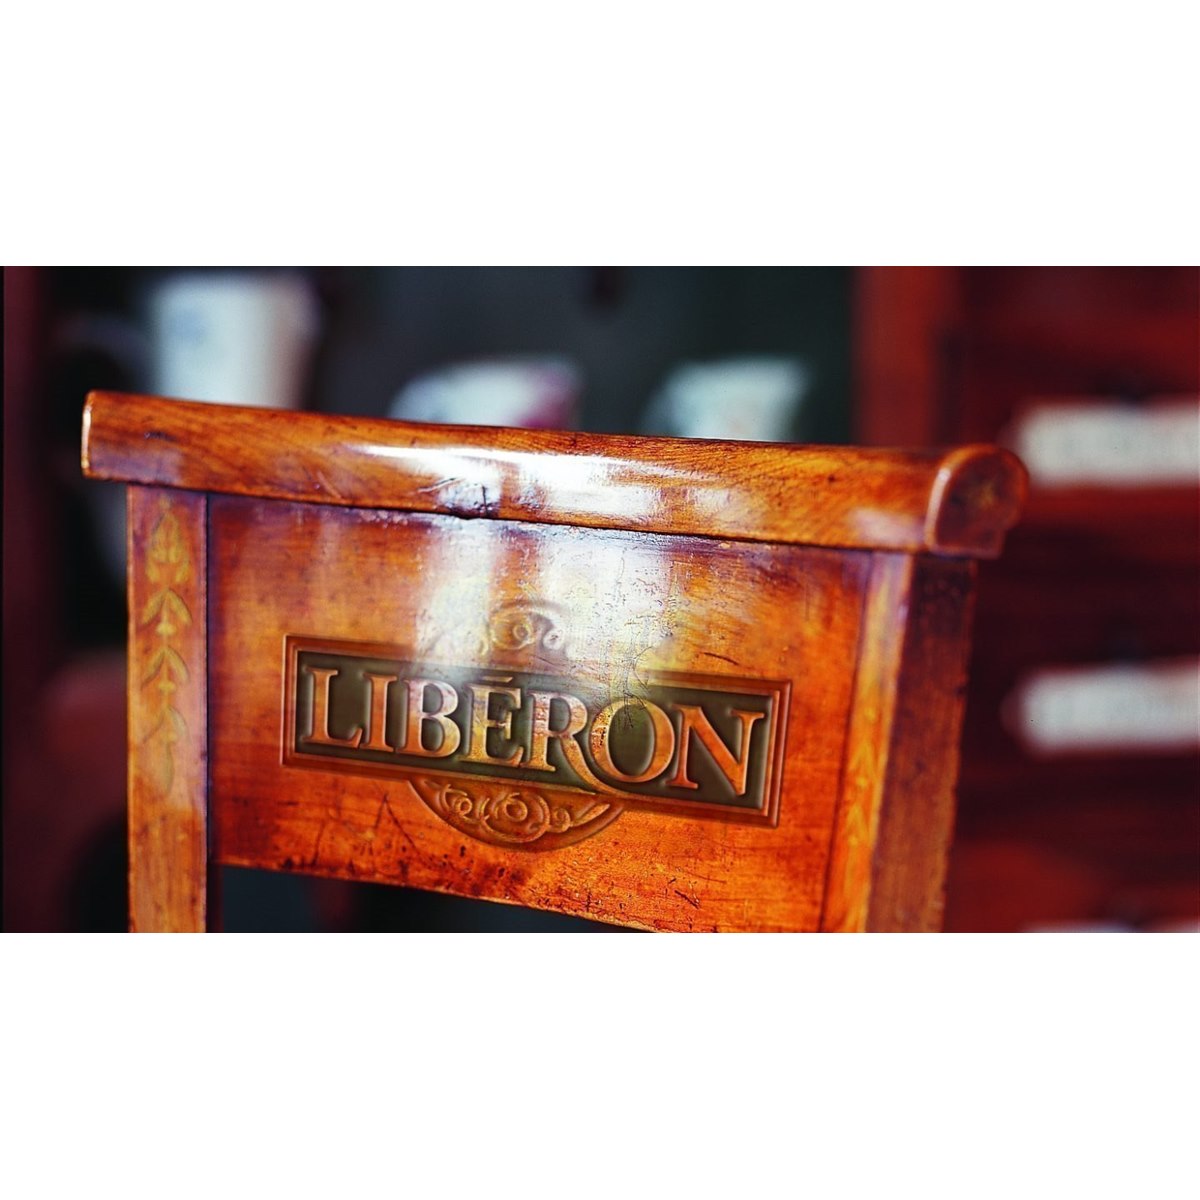 Where to buy Liberon Gilt Cream